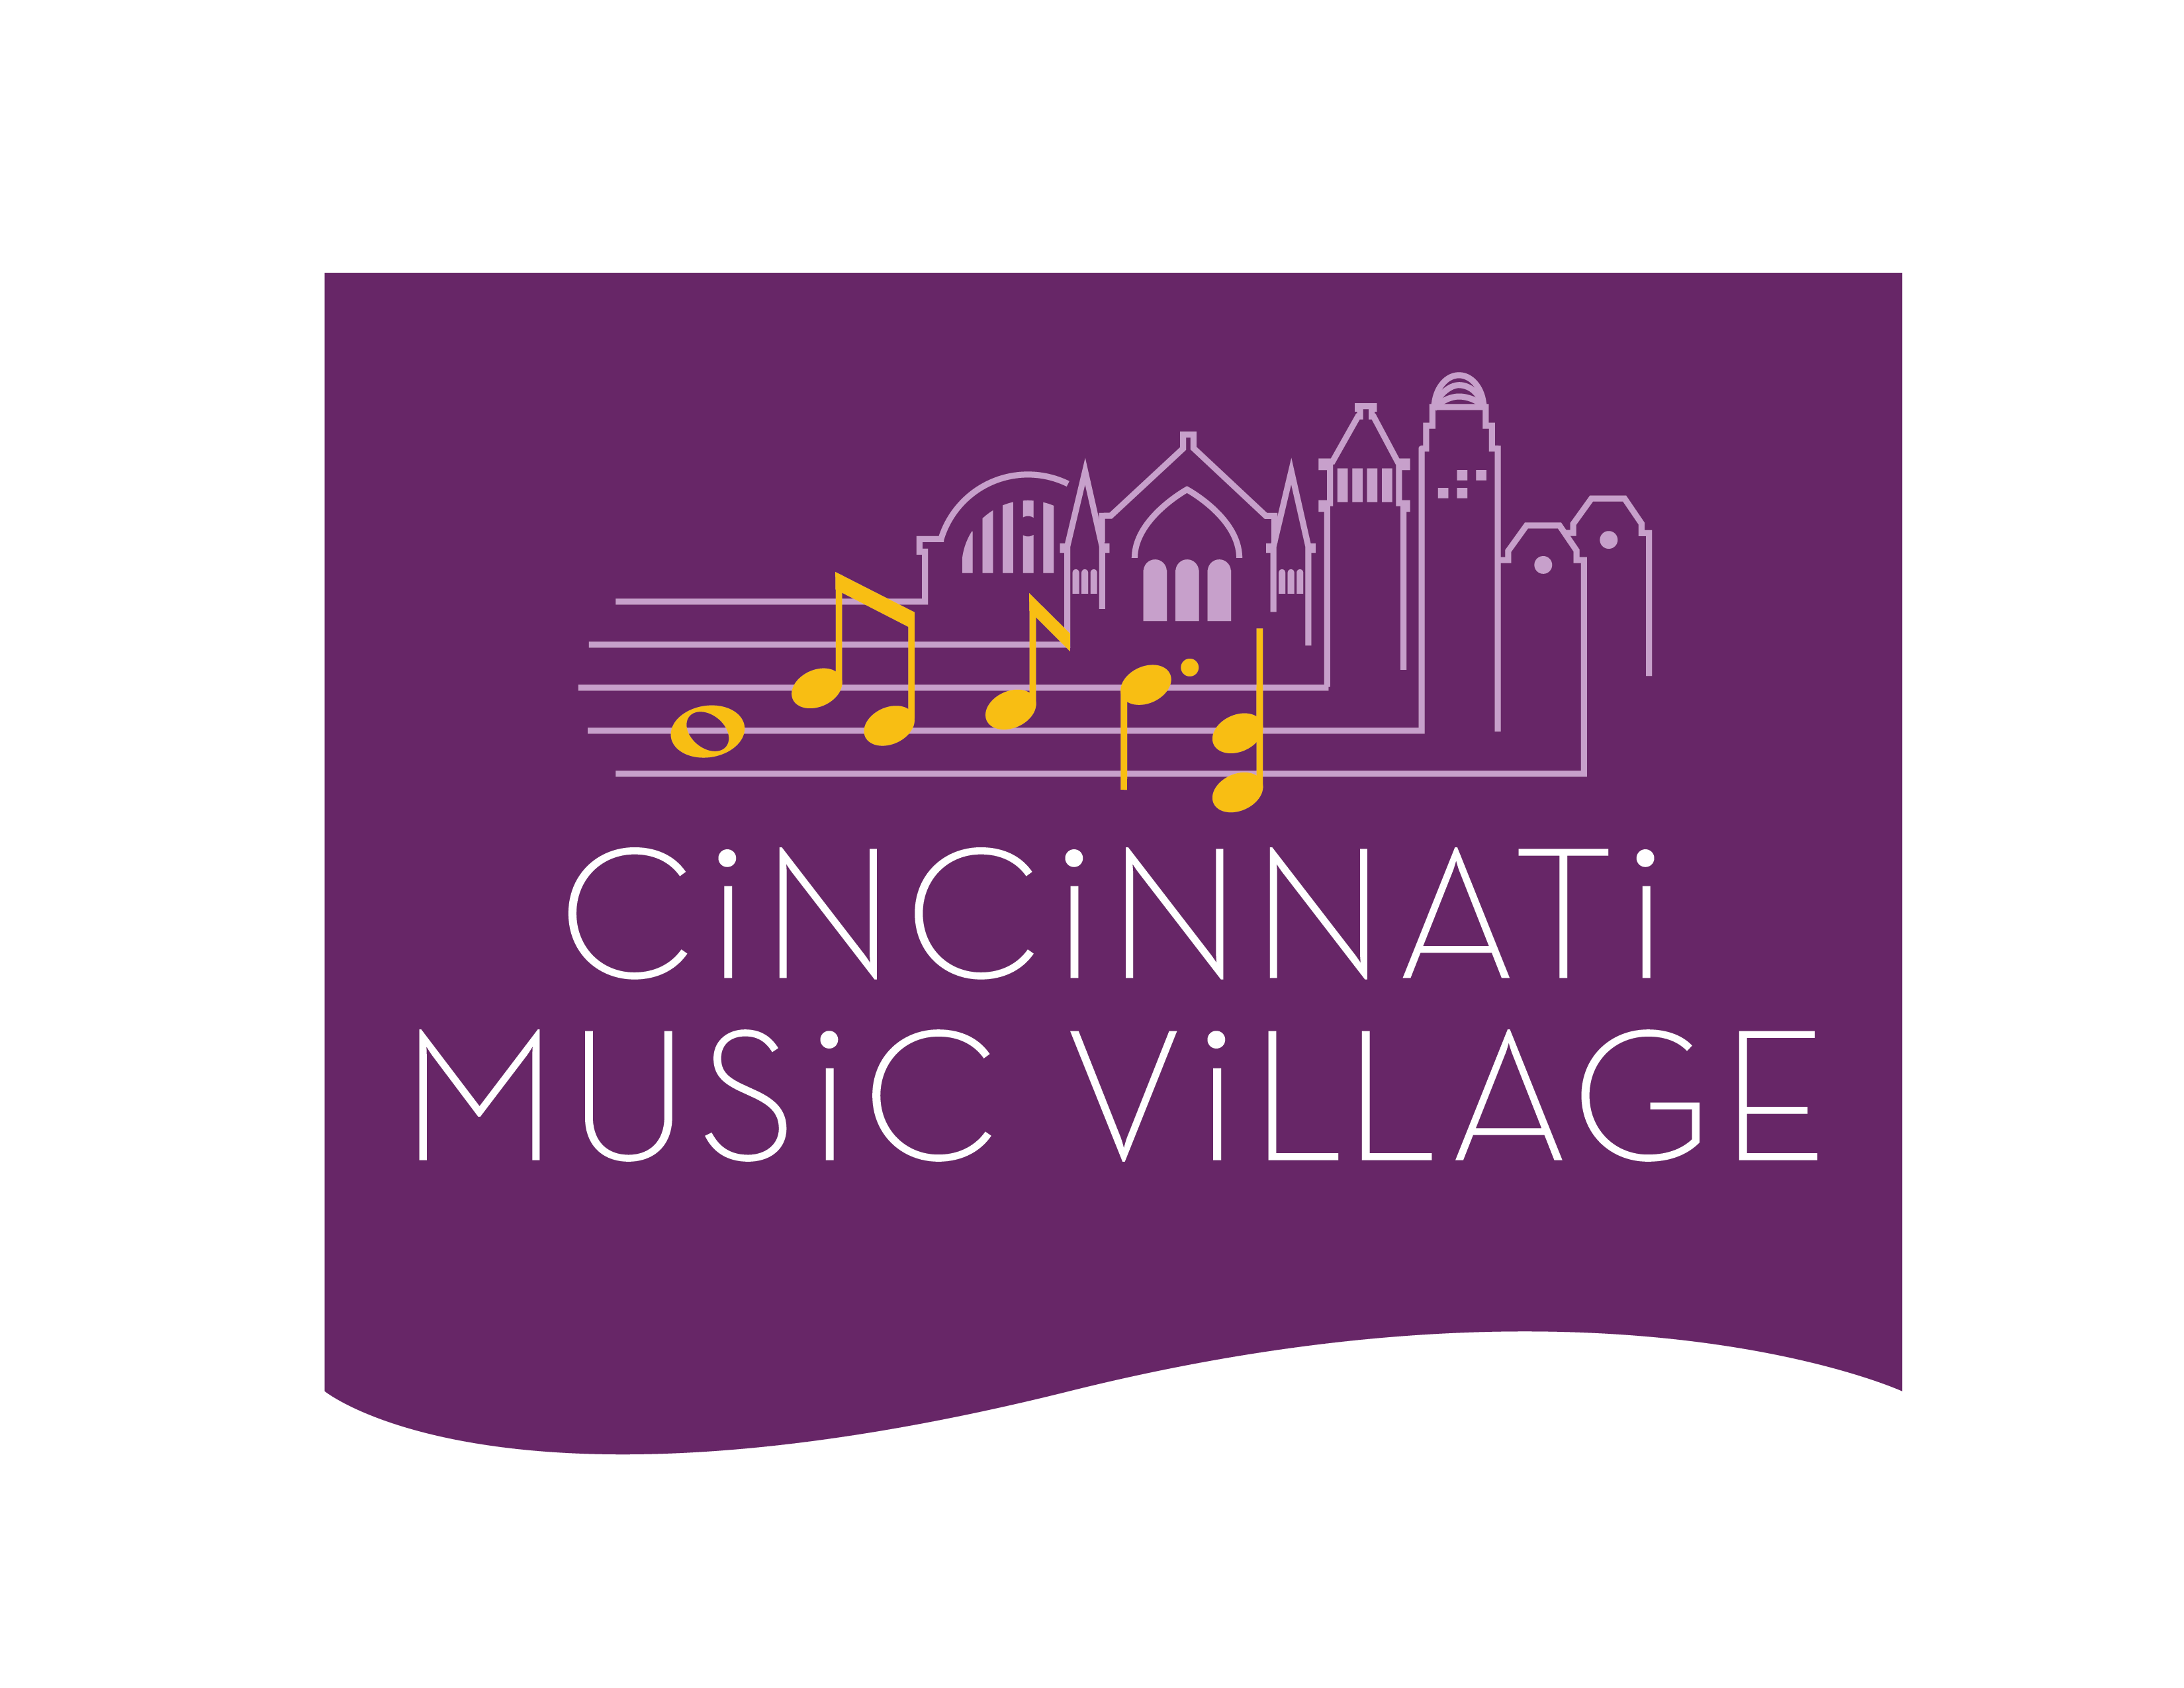 Cincinnati Music Village logo